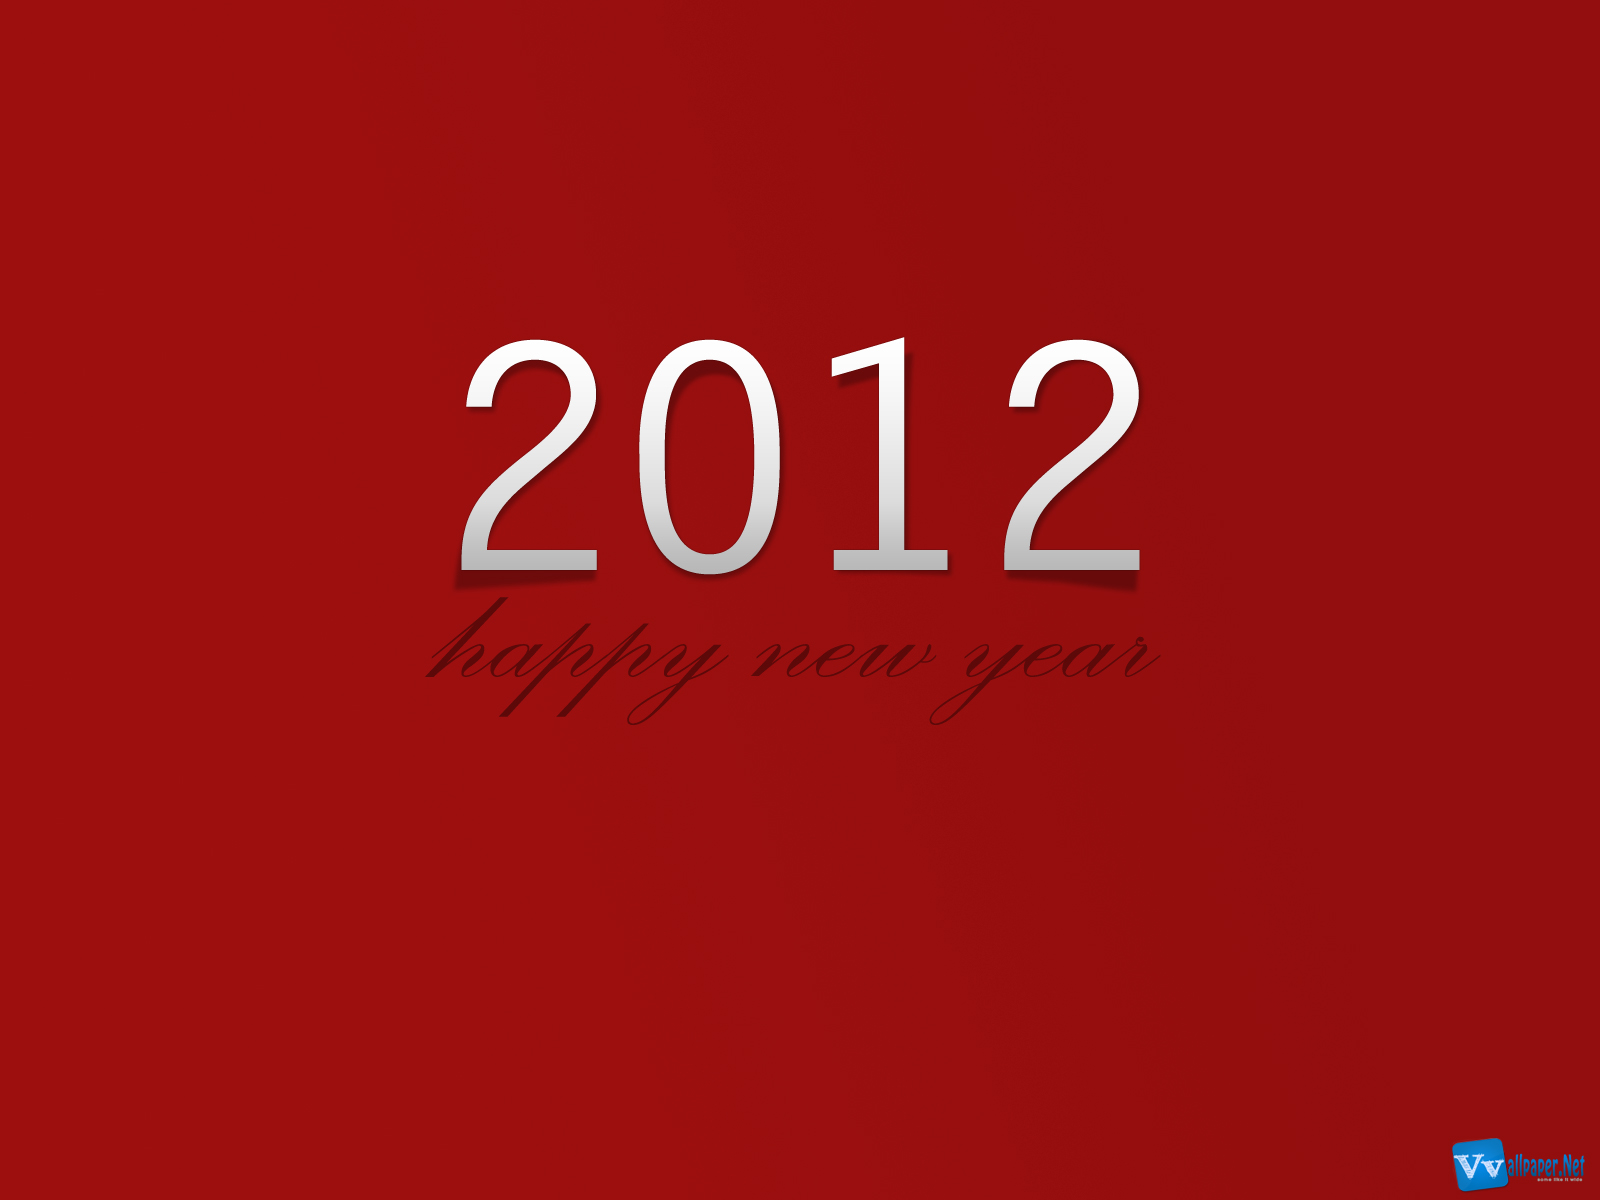 http://4.bp.blogspot.com/-ynr3BgYHrCU/TuSUcrYjTQI/AAAAAAAAE28/zAjMdeMTmWc/s1600/2012_Happy_New_Year_Text_Red_Wallpaper-Vvallpaper.Net.jpg